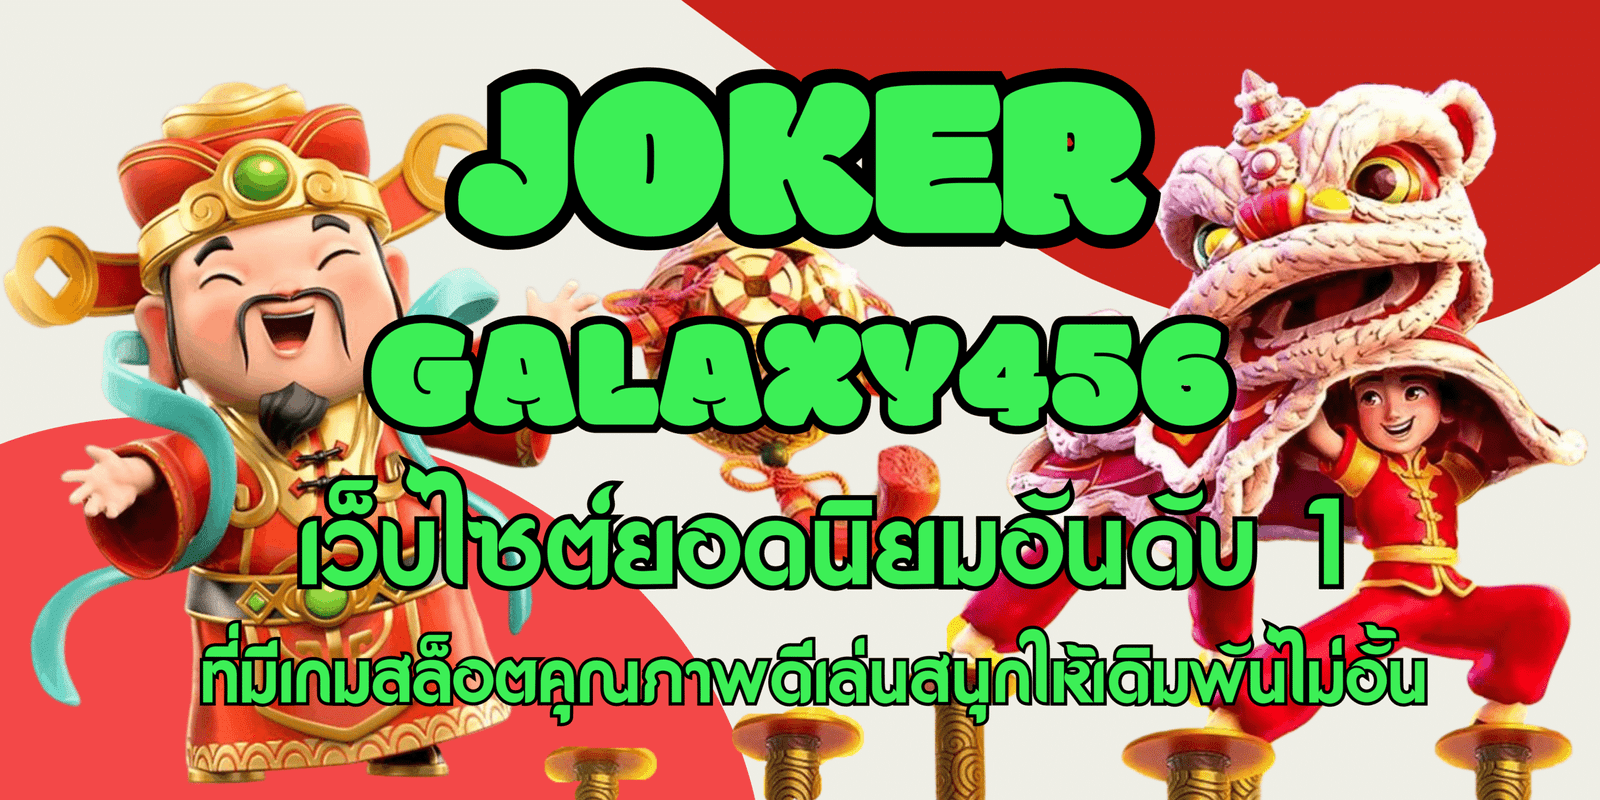 joker-galaxy456-สมัครสมาชิก